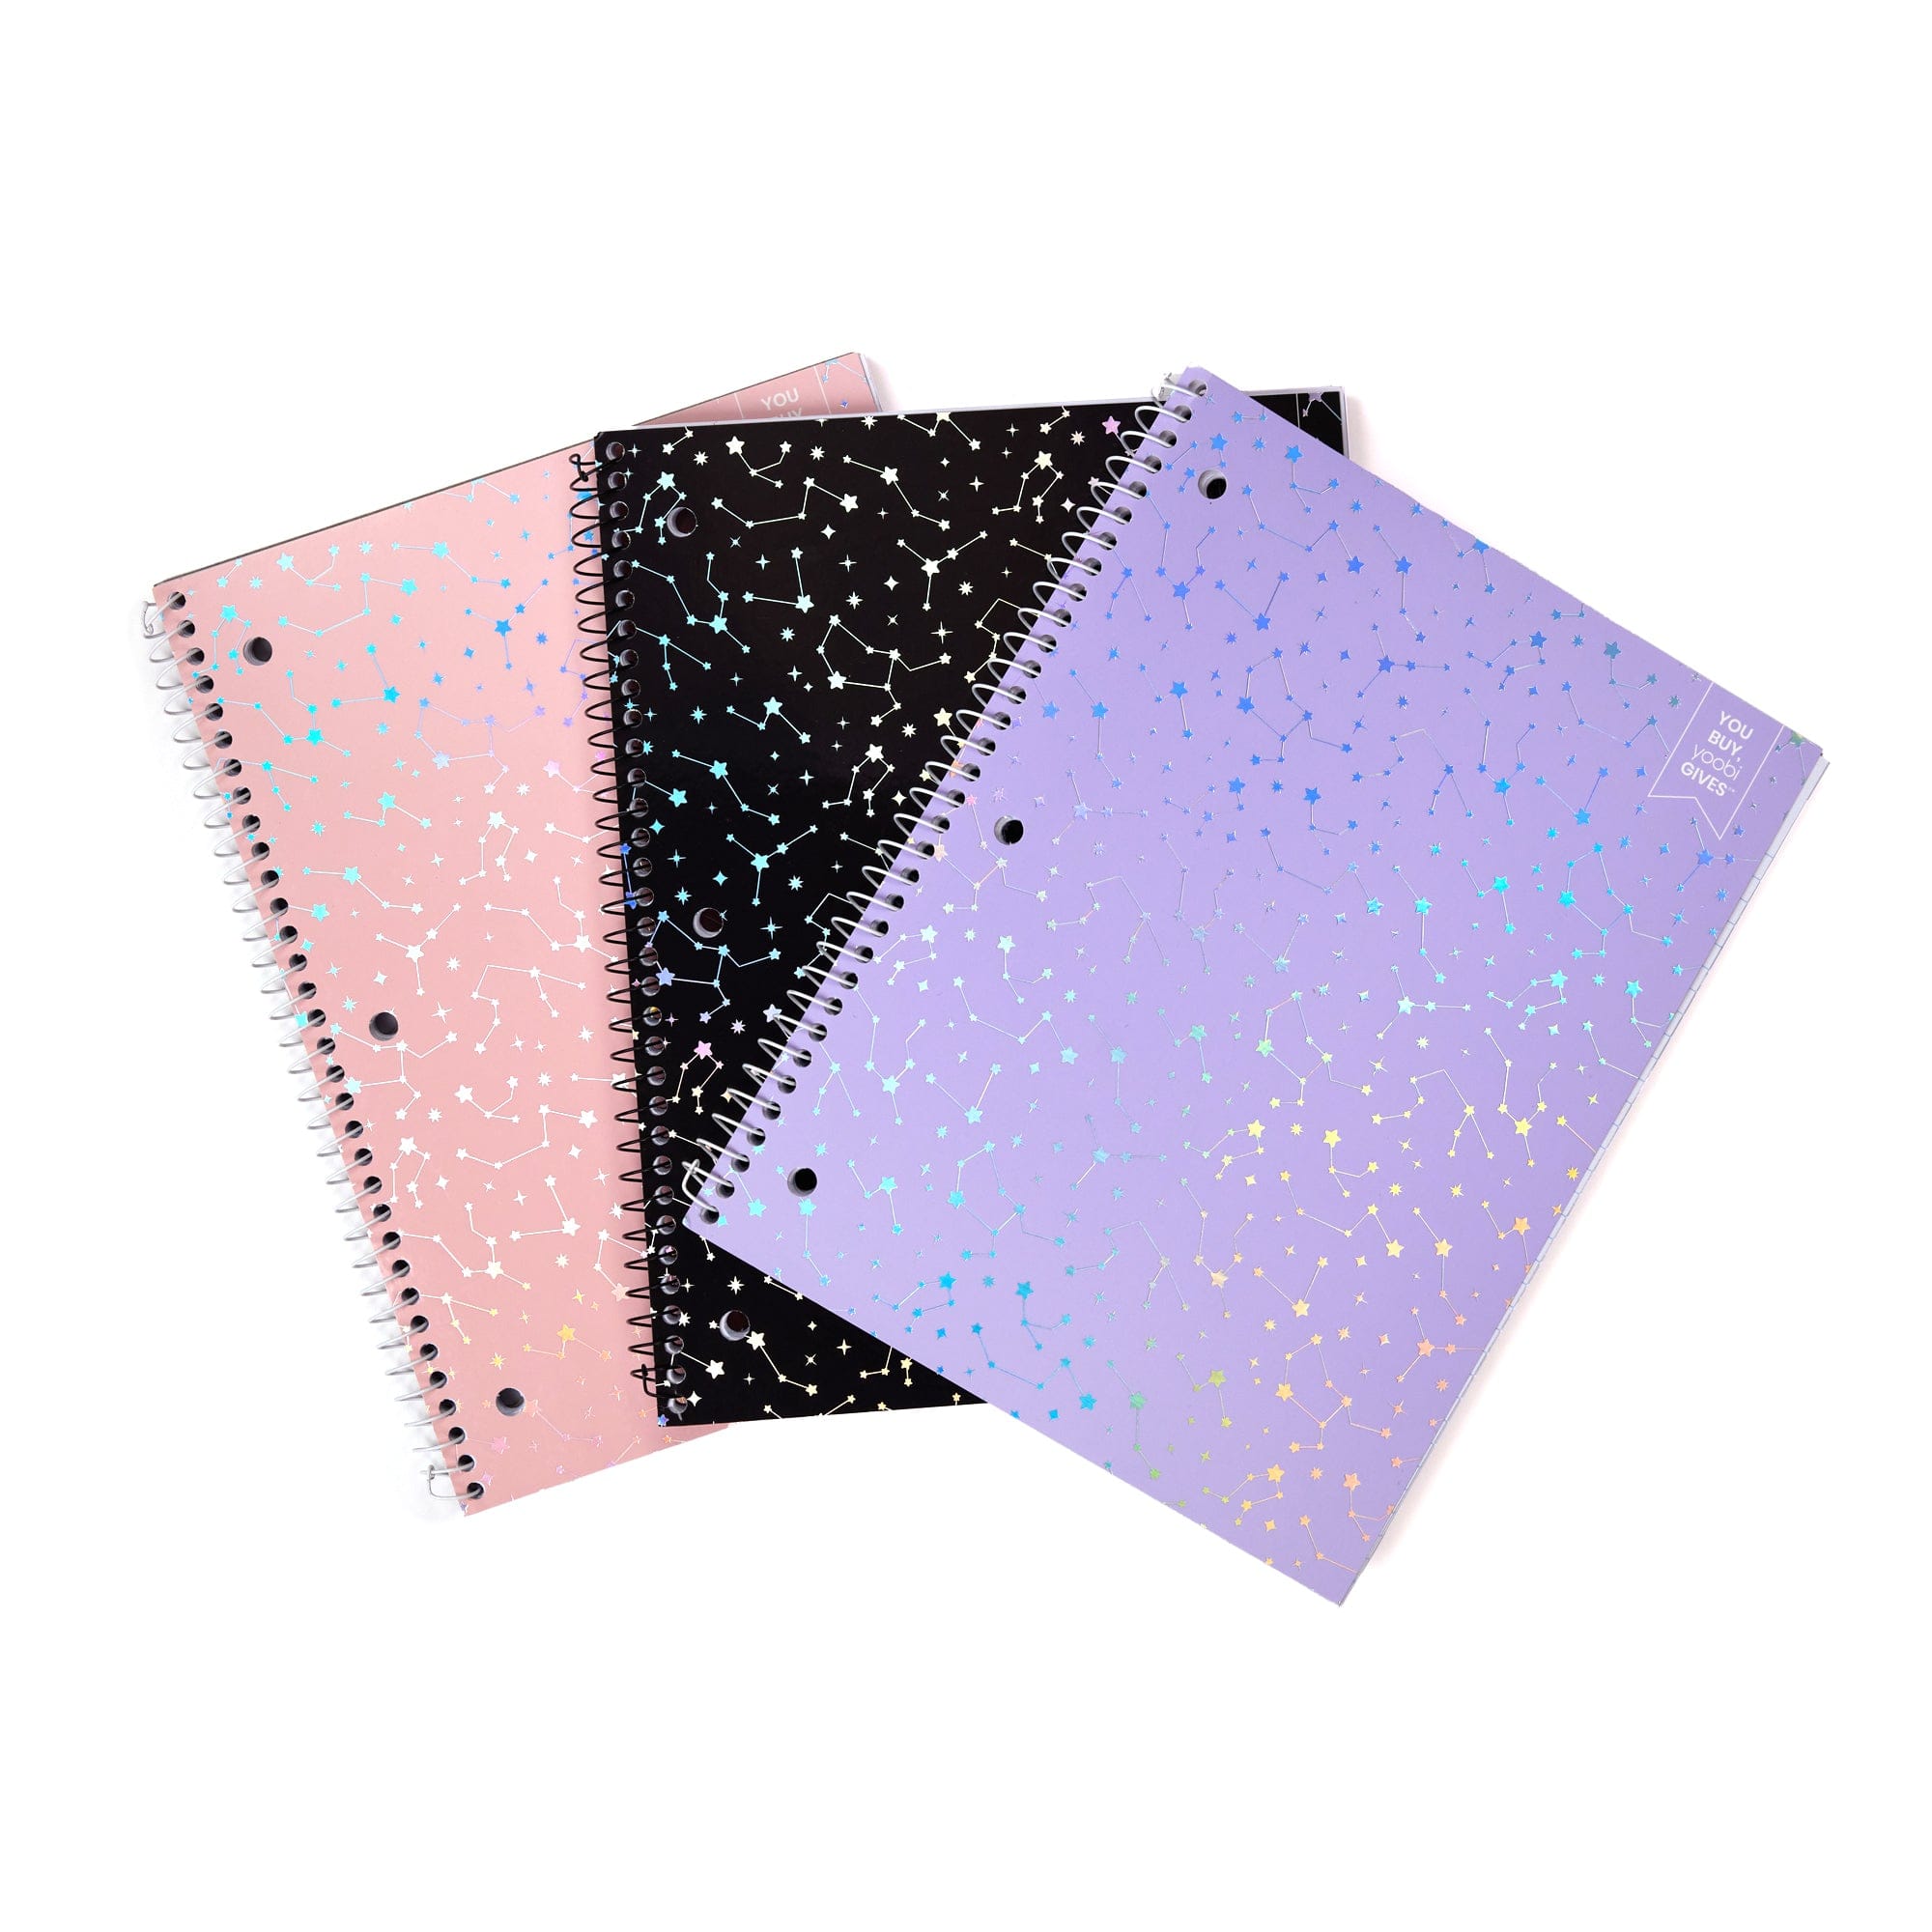 BUNDLE Yoobi Glitter Pocket Journal Notebook + Yoobi Scented 6